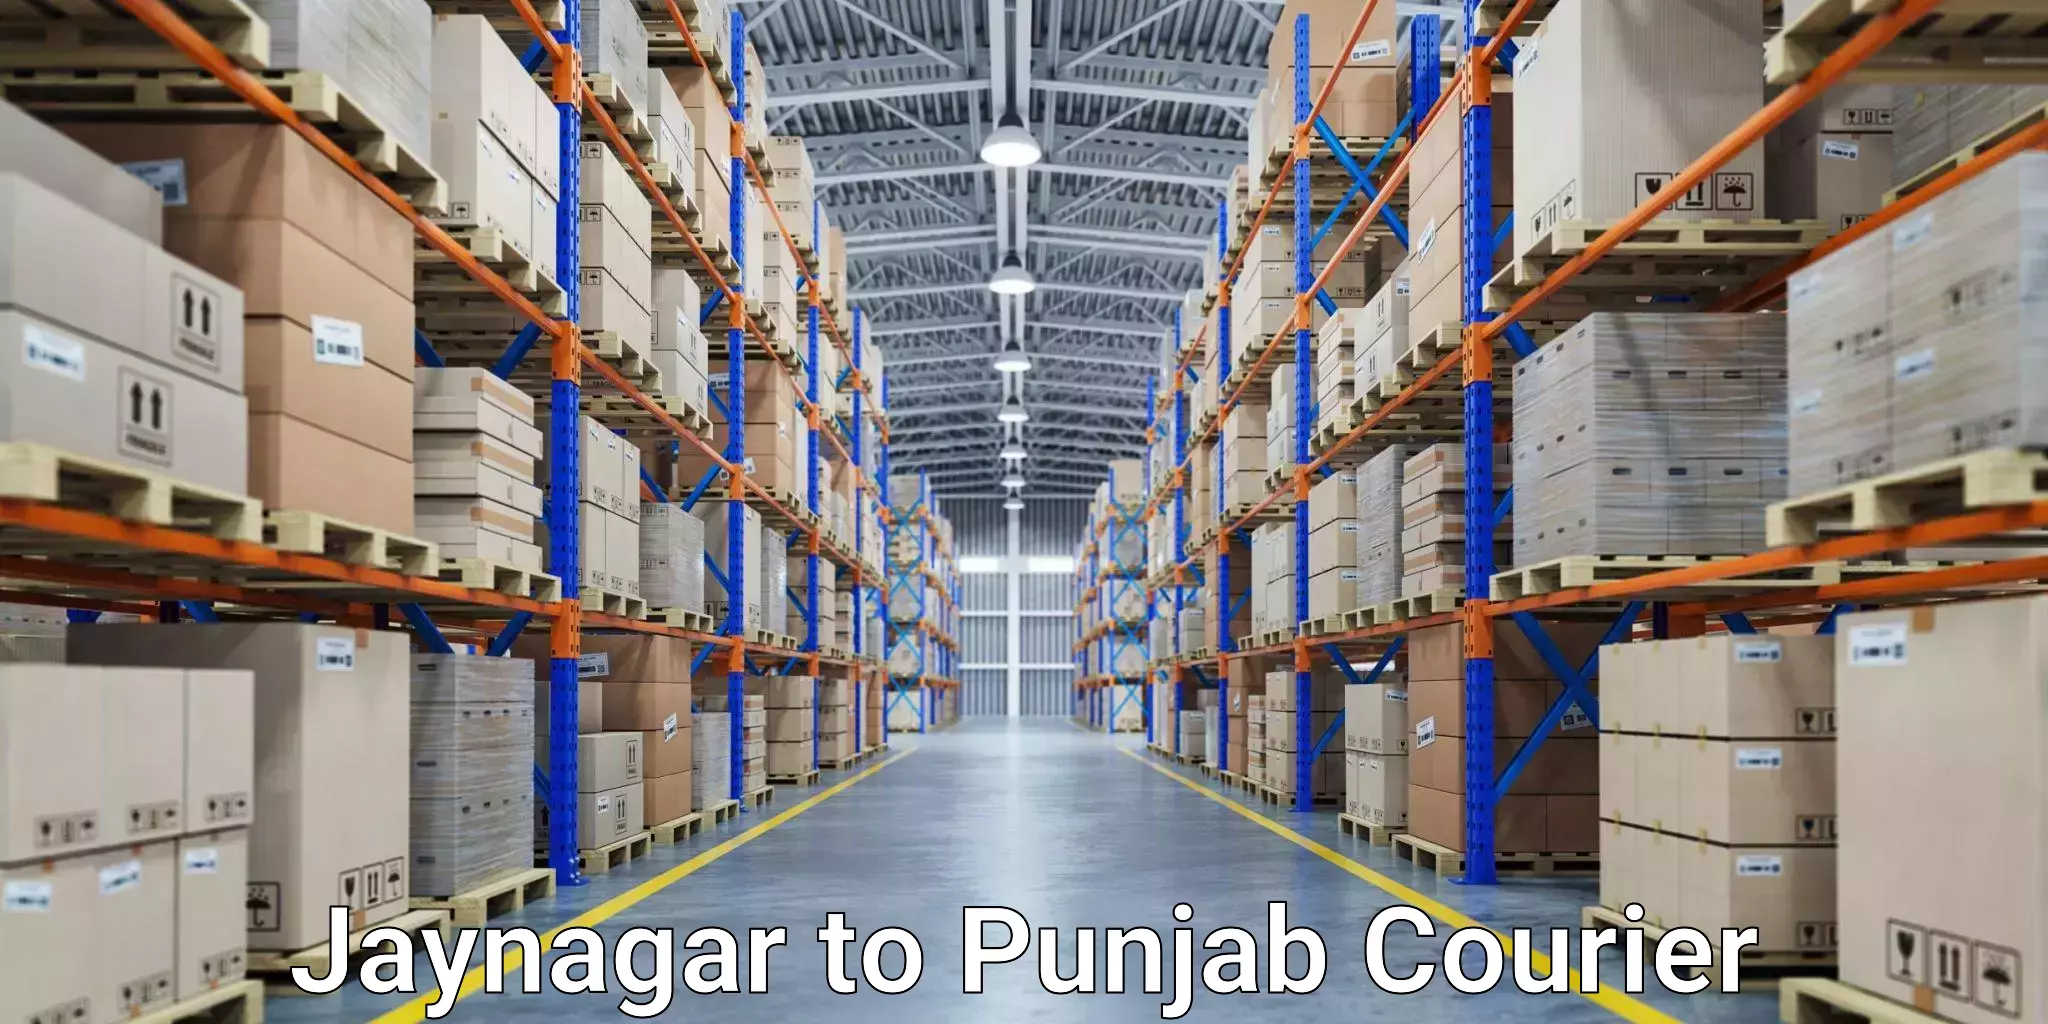 Global logistics network Jaynagar to Nawanshahr